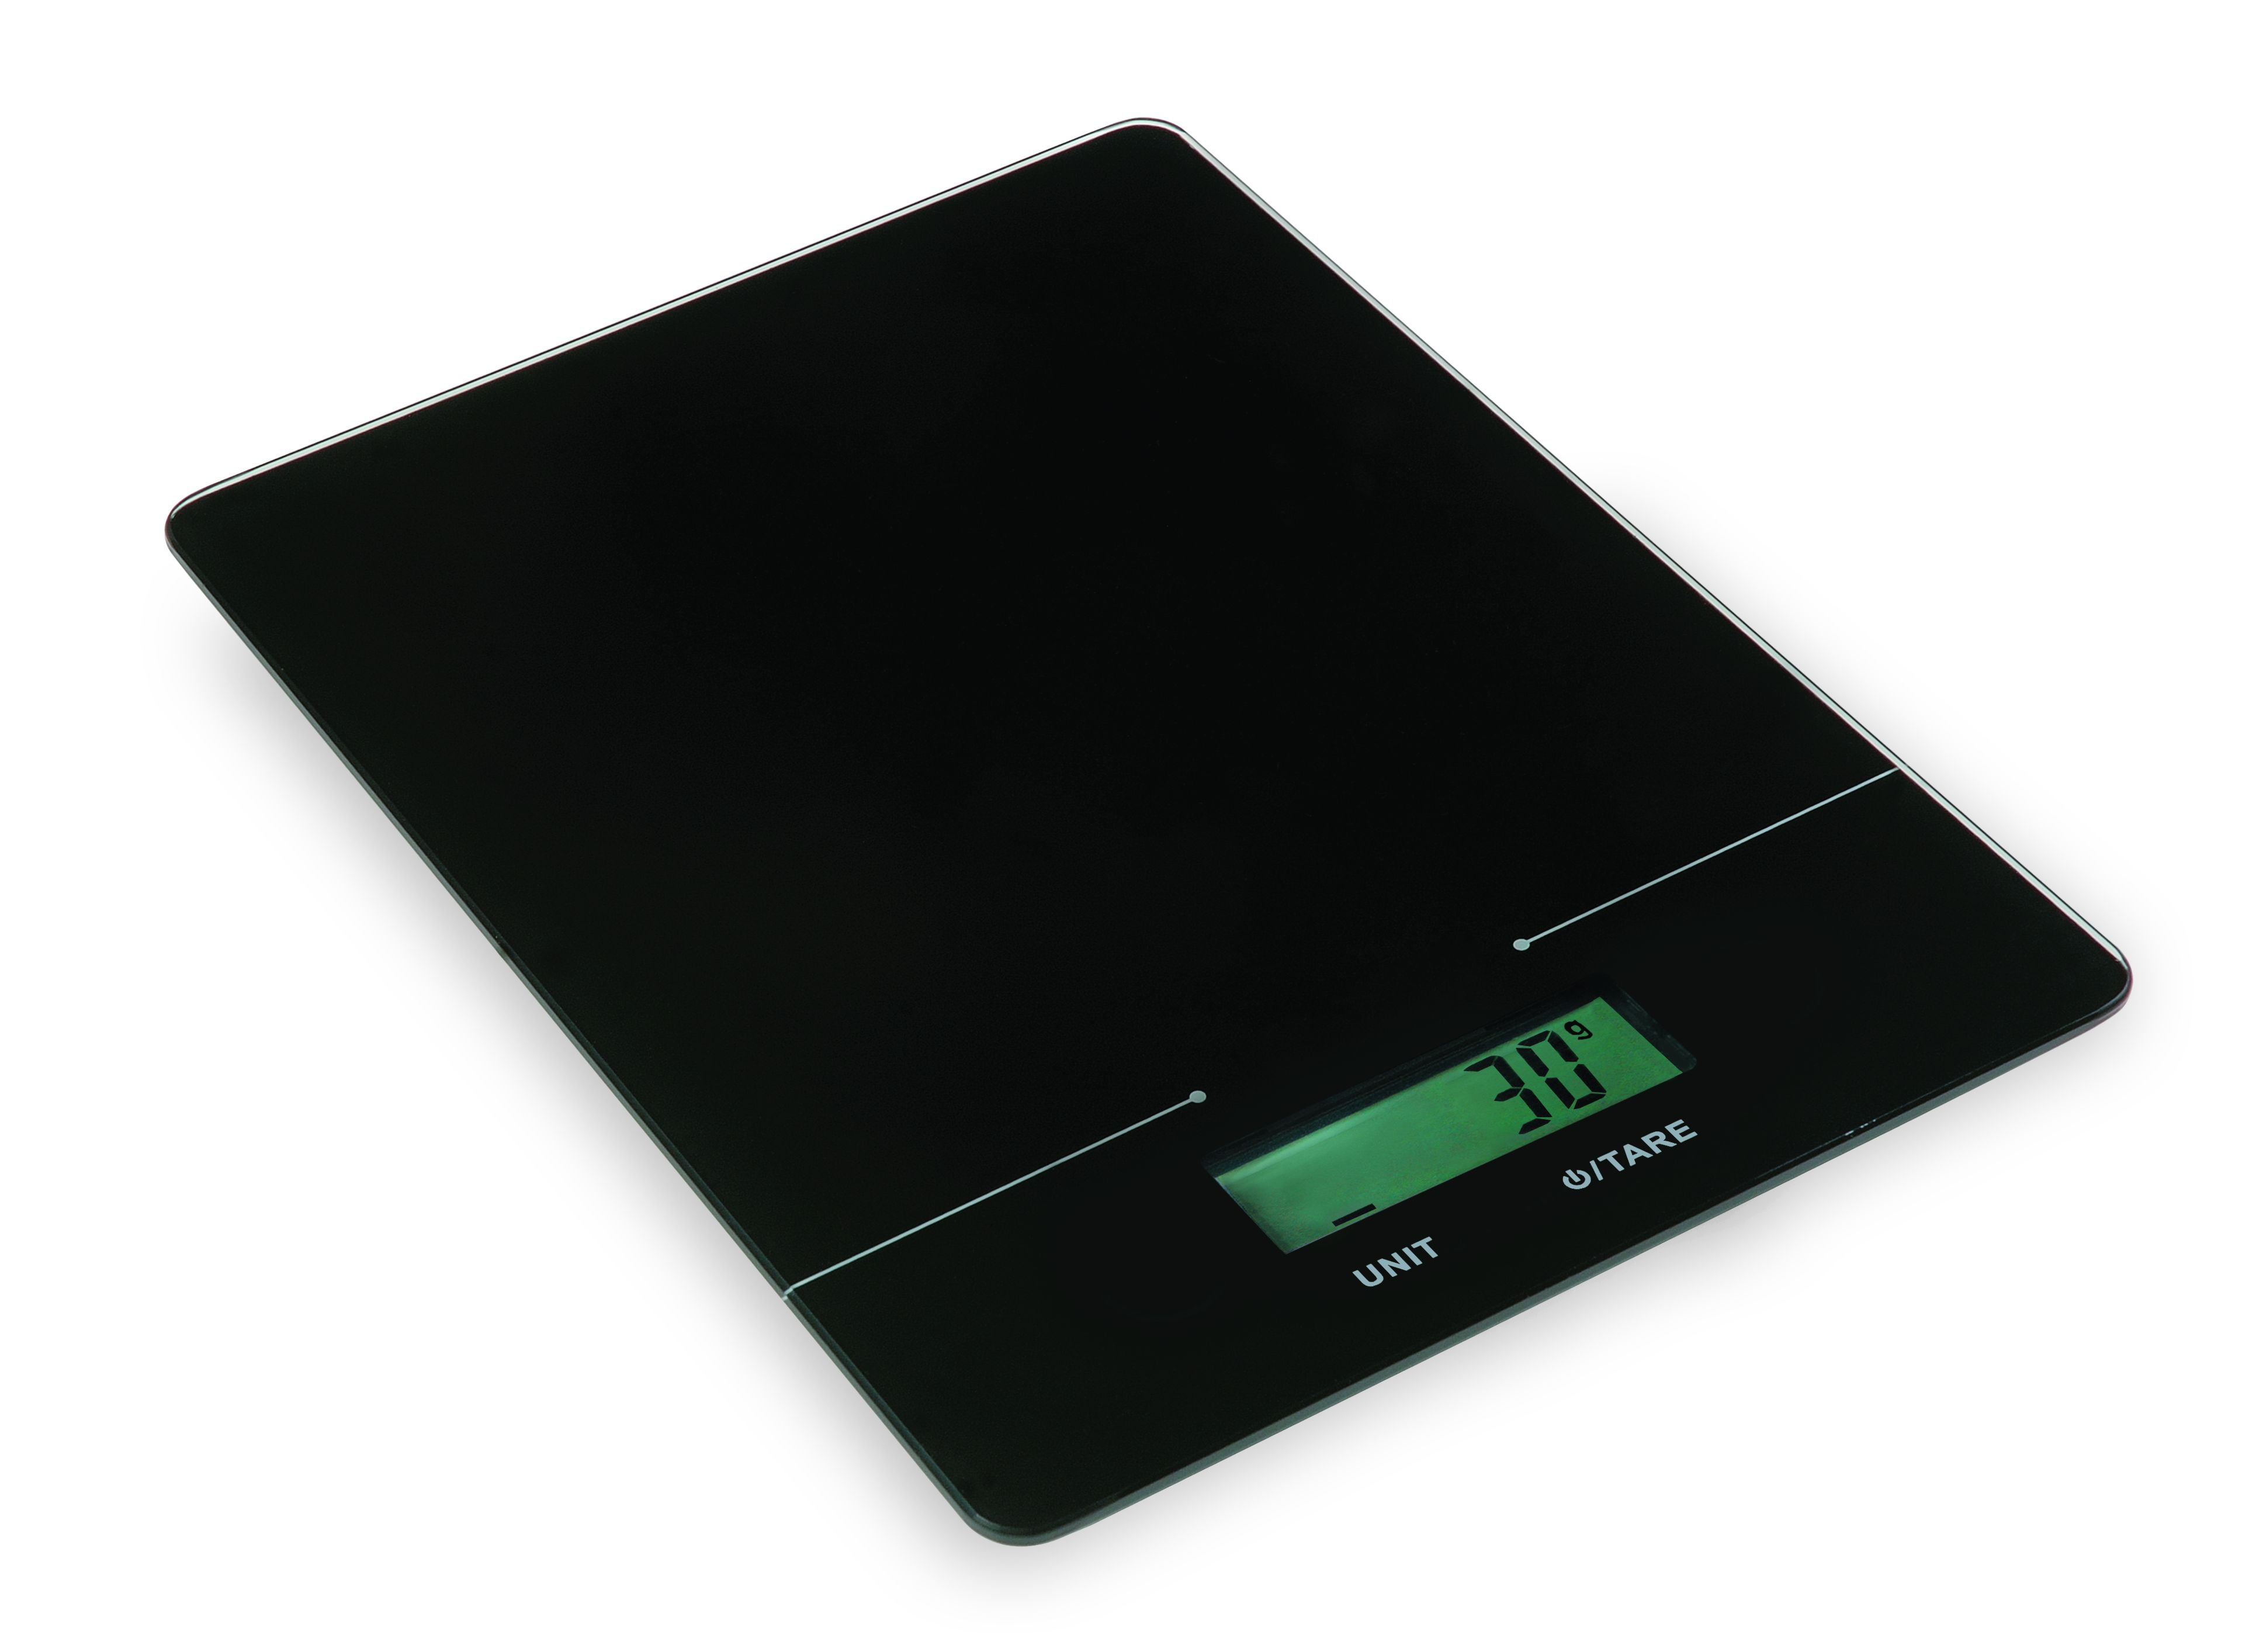 OXO Precision Coffee Scale with Timer, Slim design, 6 lb, Black